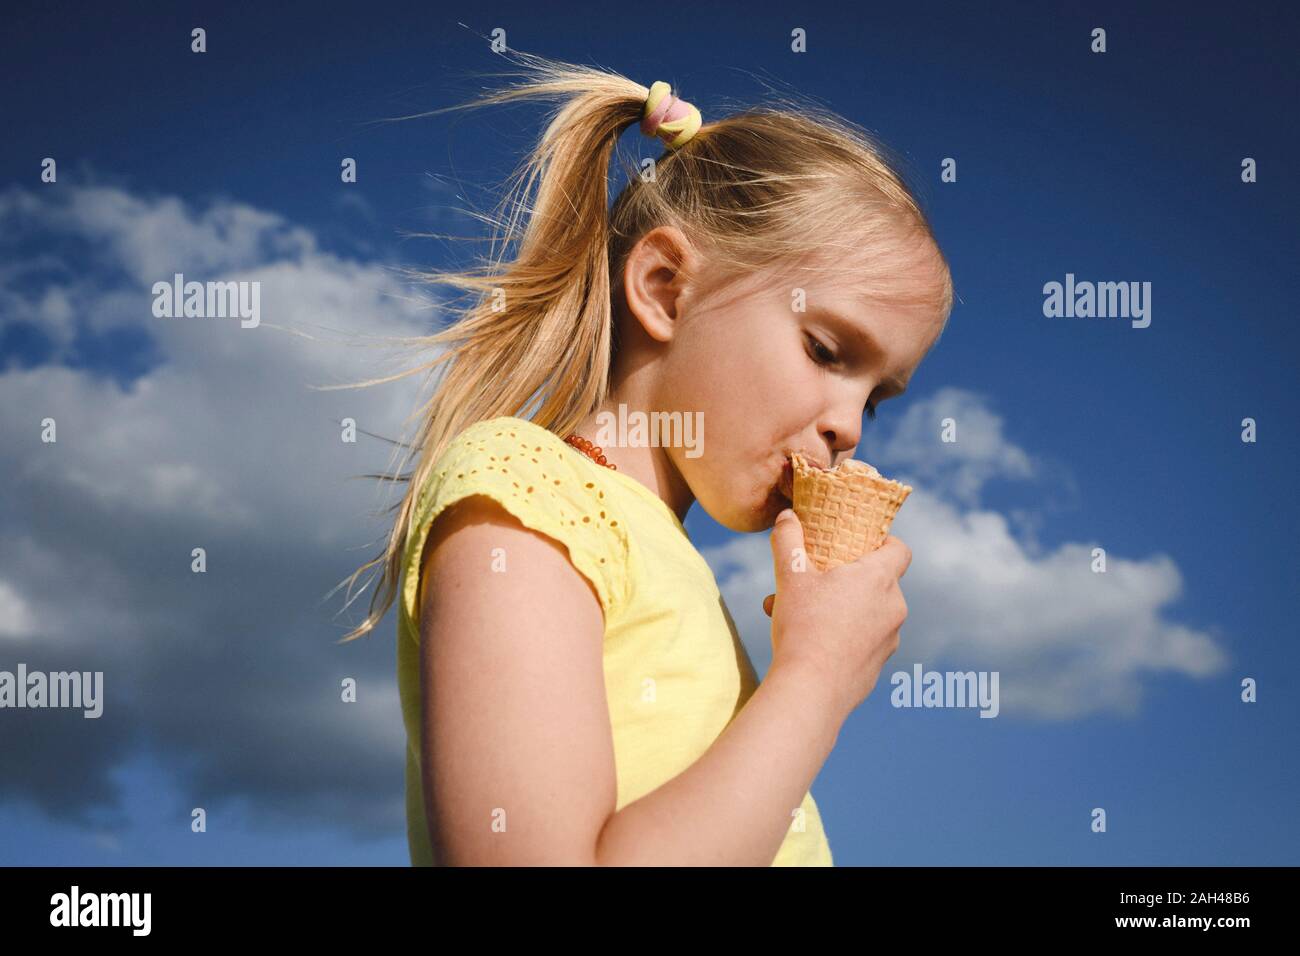 Portrait of blond girl eating ice cream against sky Stock Photo